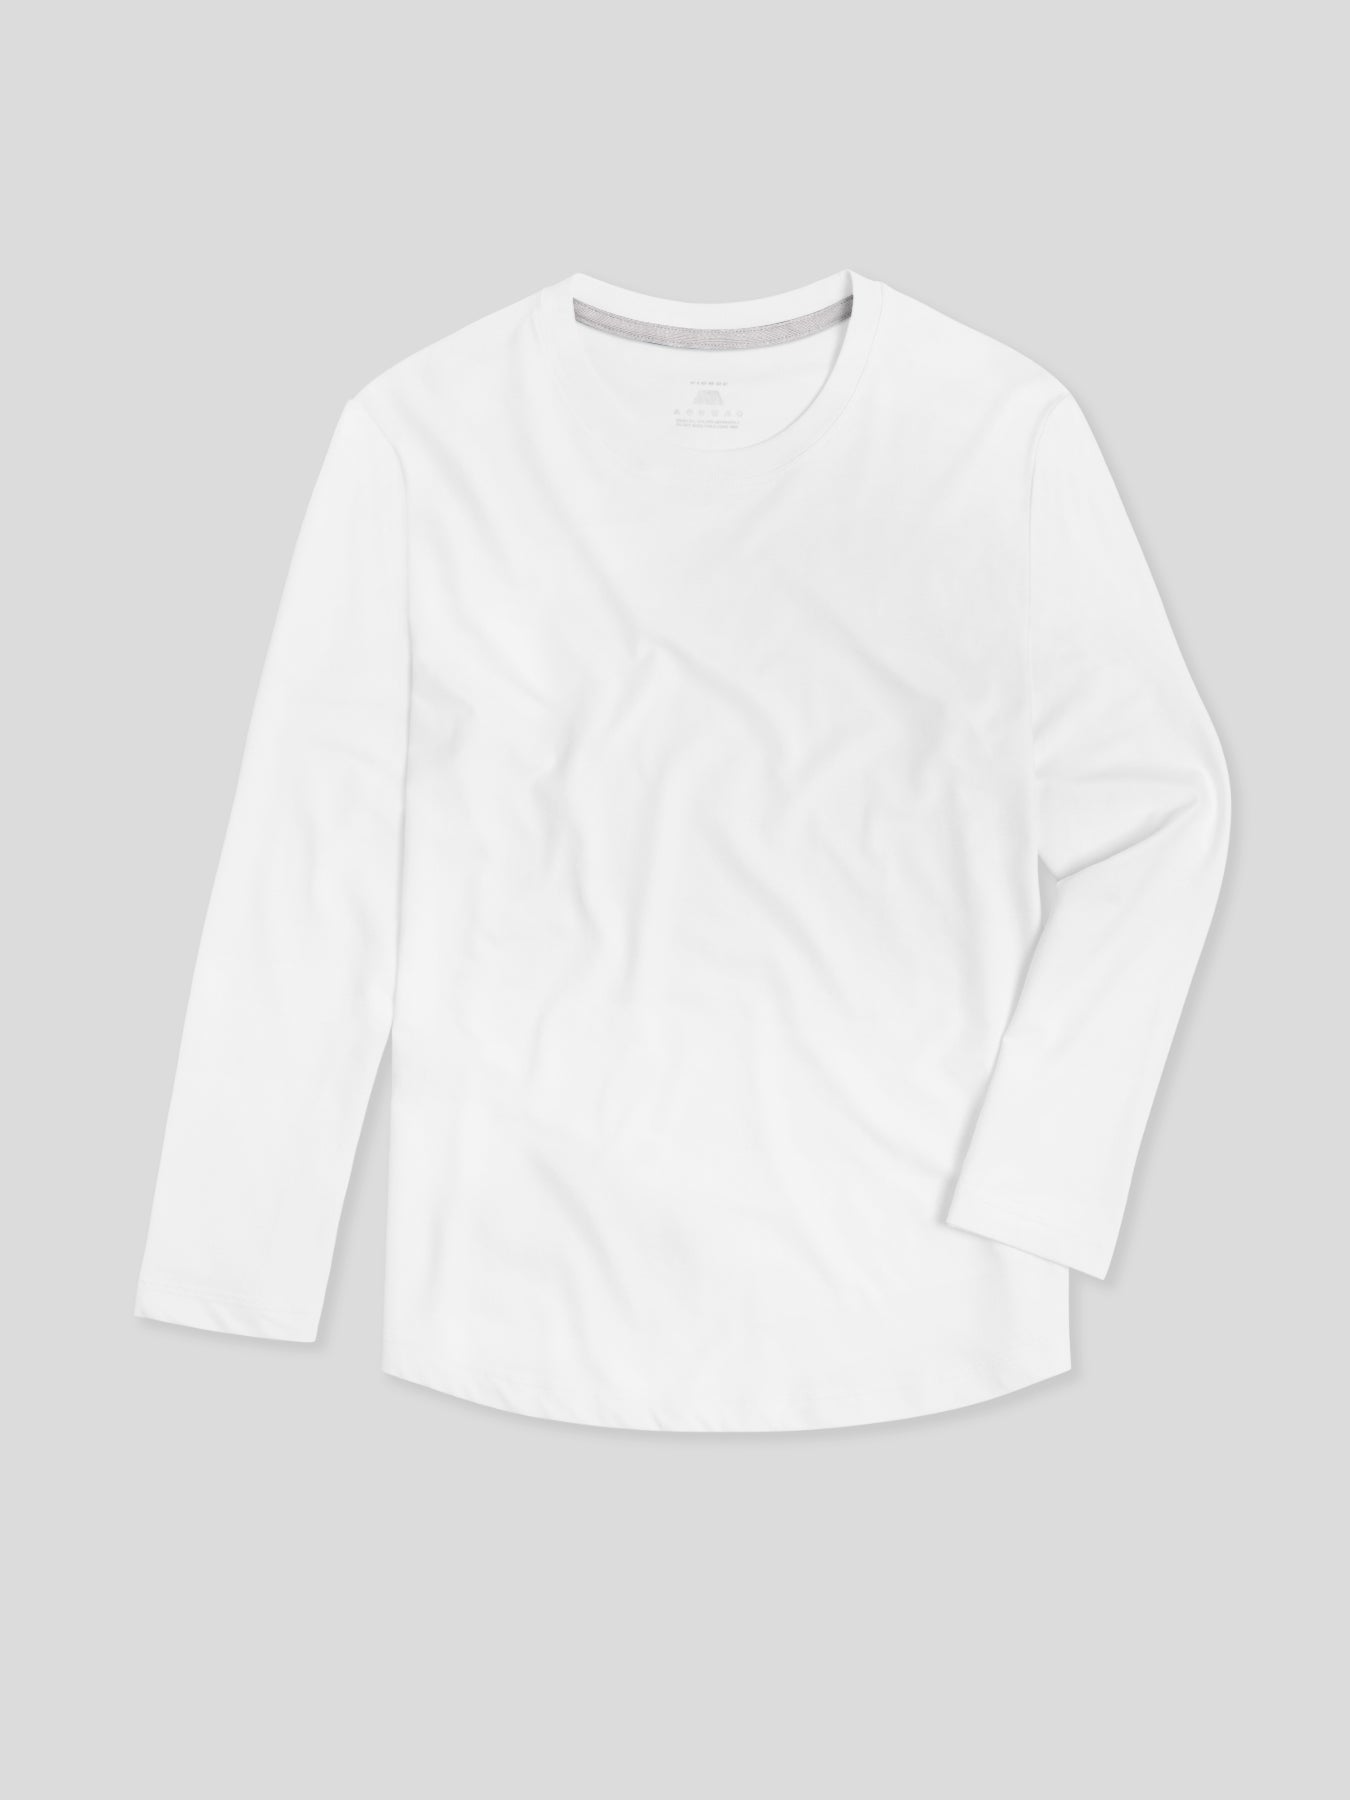 StaySmooth Langarm-T-Shirt mit abgerundetem Saum: Slim Fit